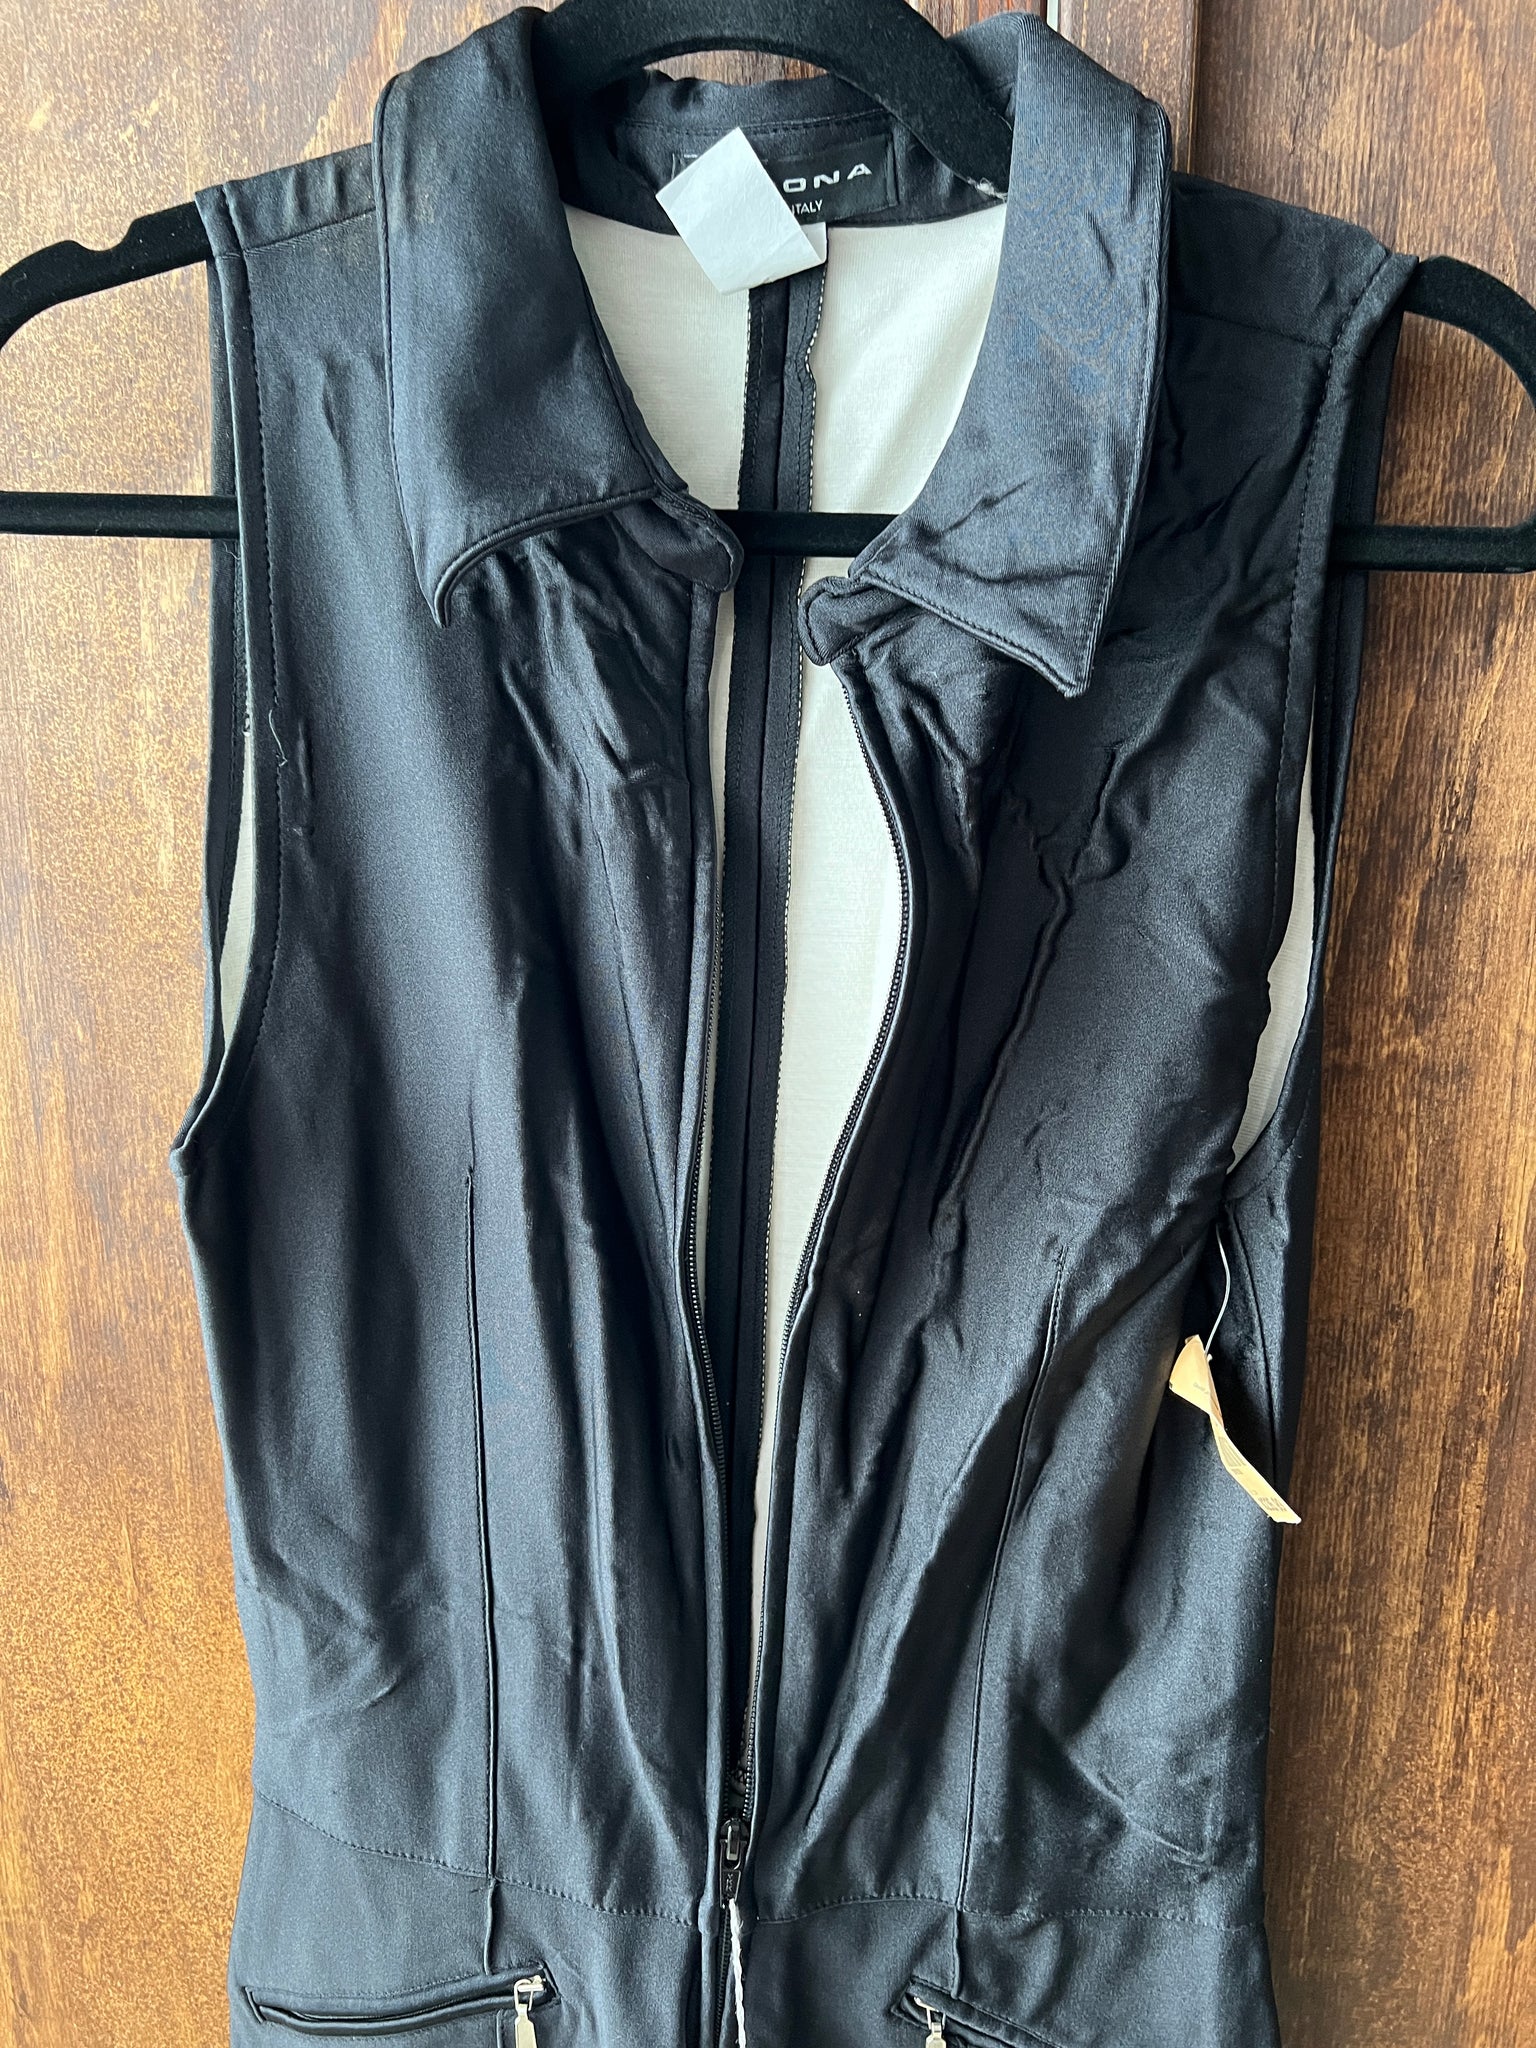 1990s SKI SUIT- Ancona black sleeveless ski suit AS IS